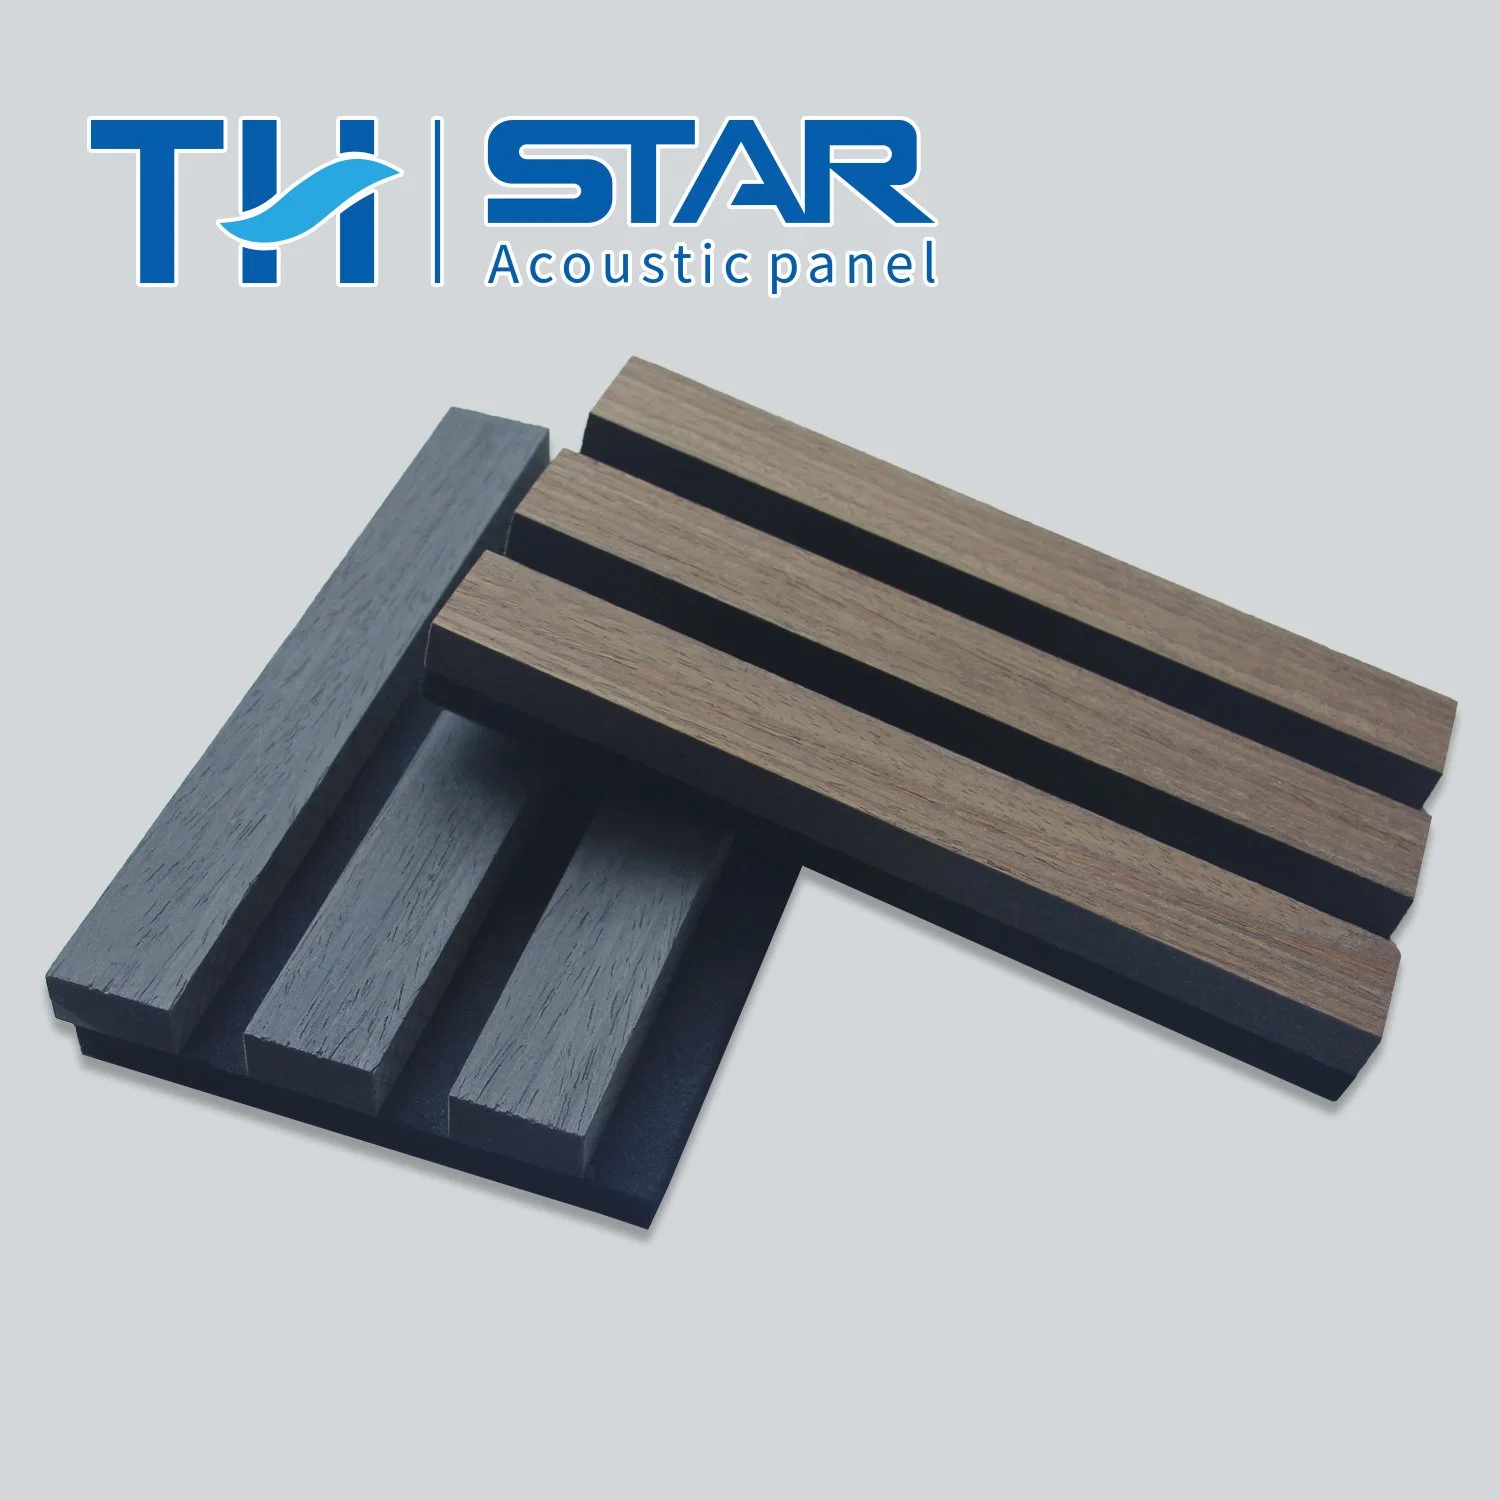 Tianhan Sound Absorbing Wood Slat Acoustic Panel Decorative Timber Panel